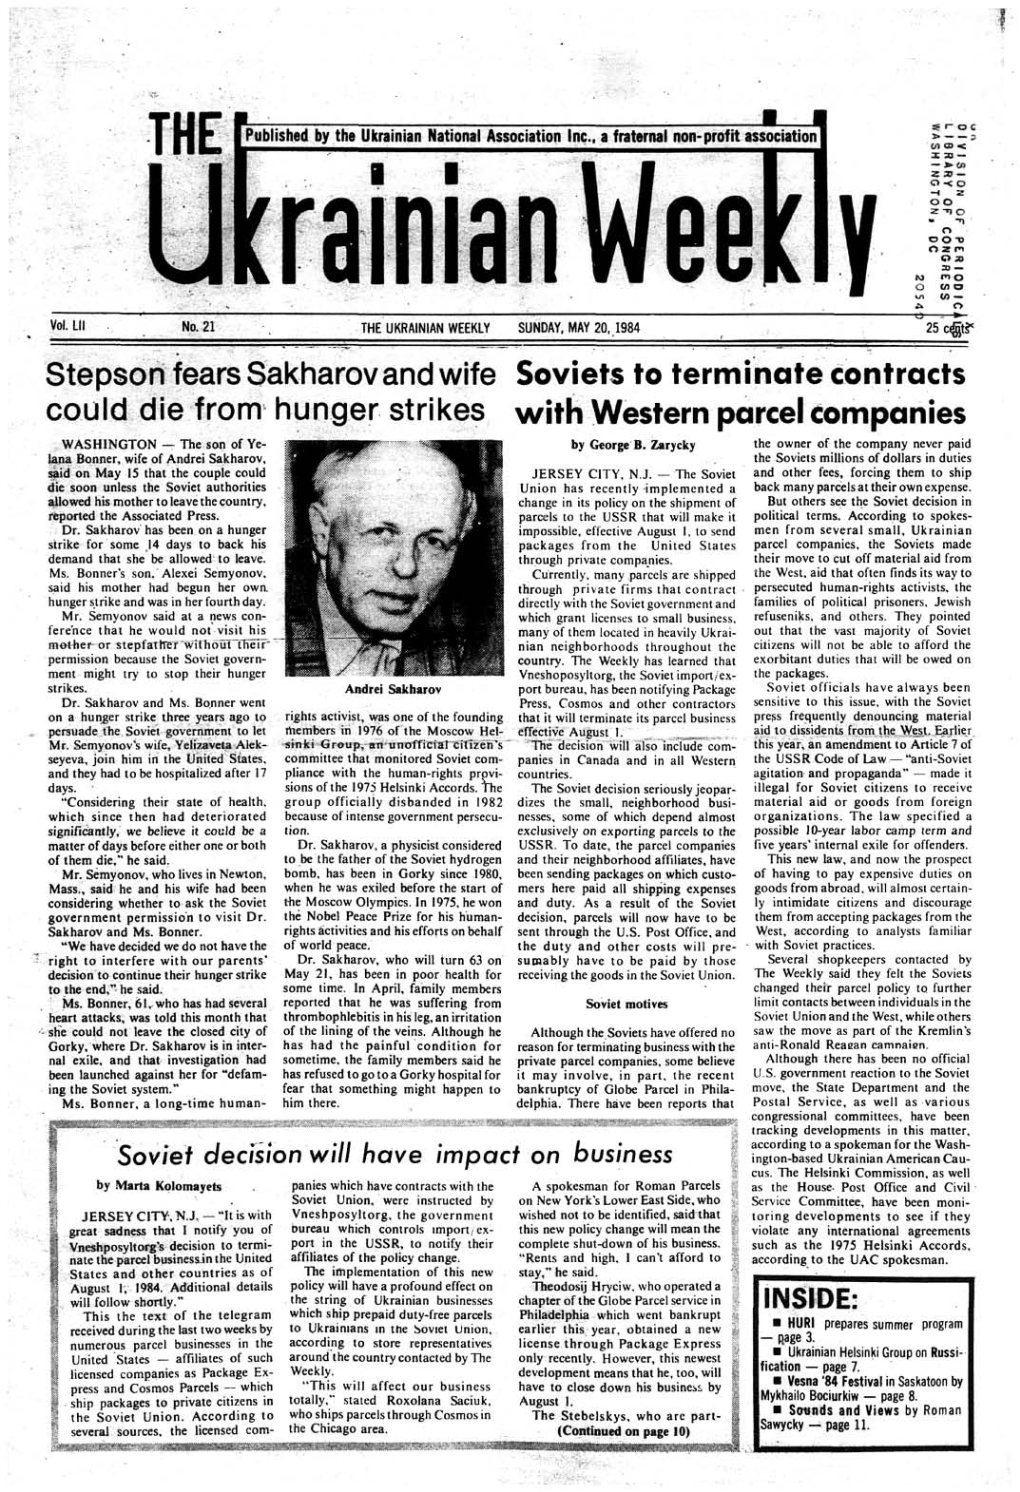 The Ukrainian Weekly 1984, No.21